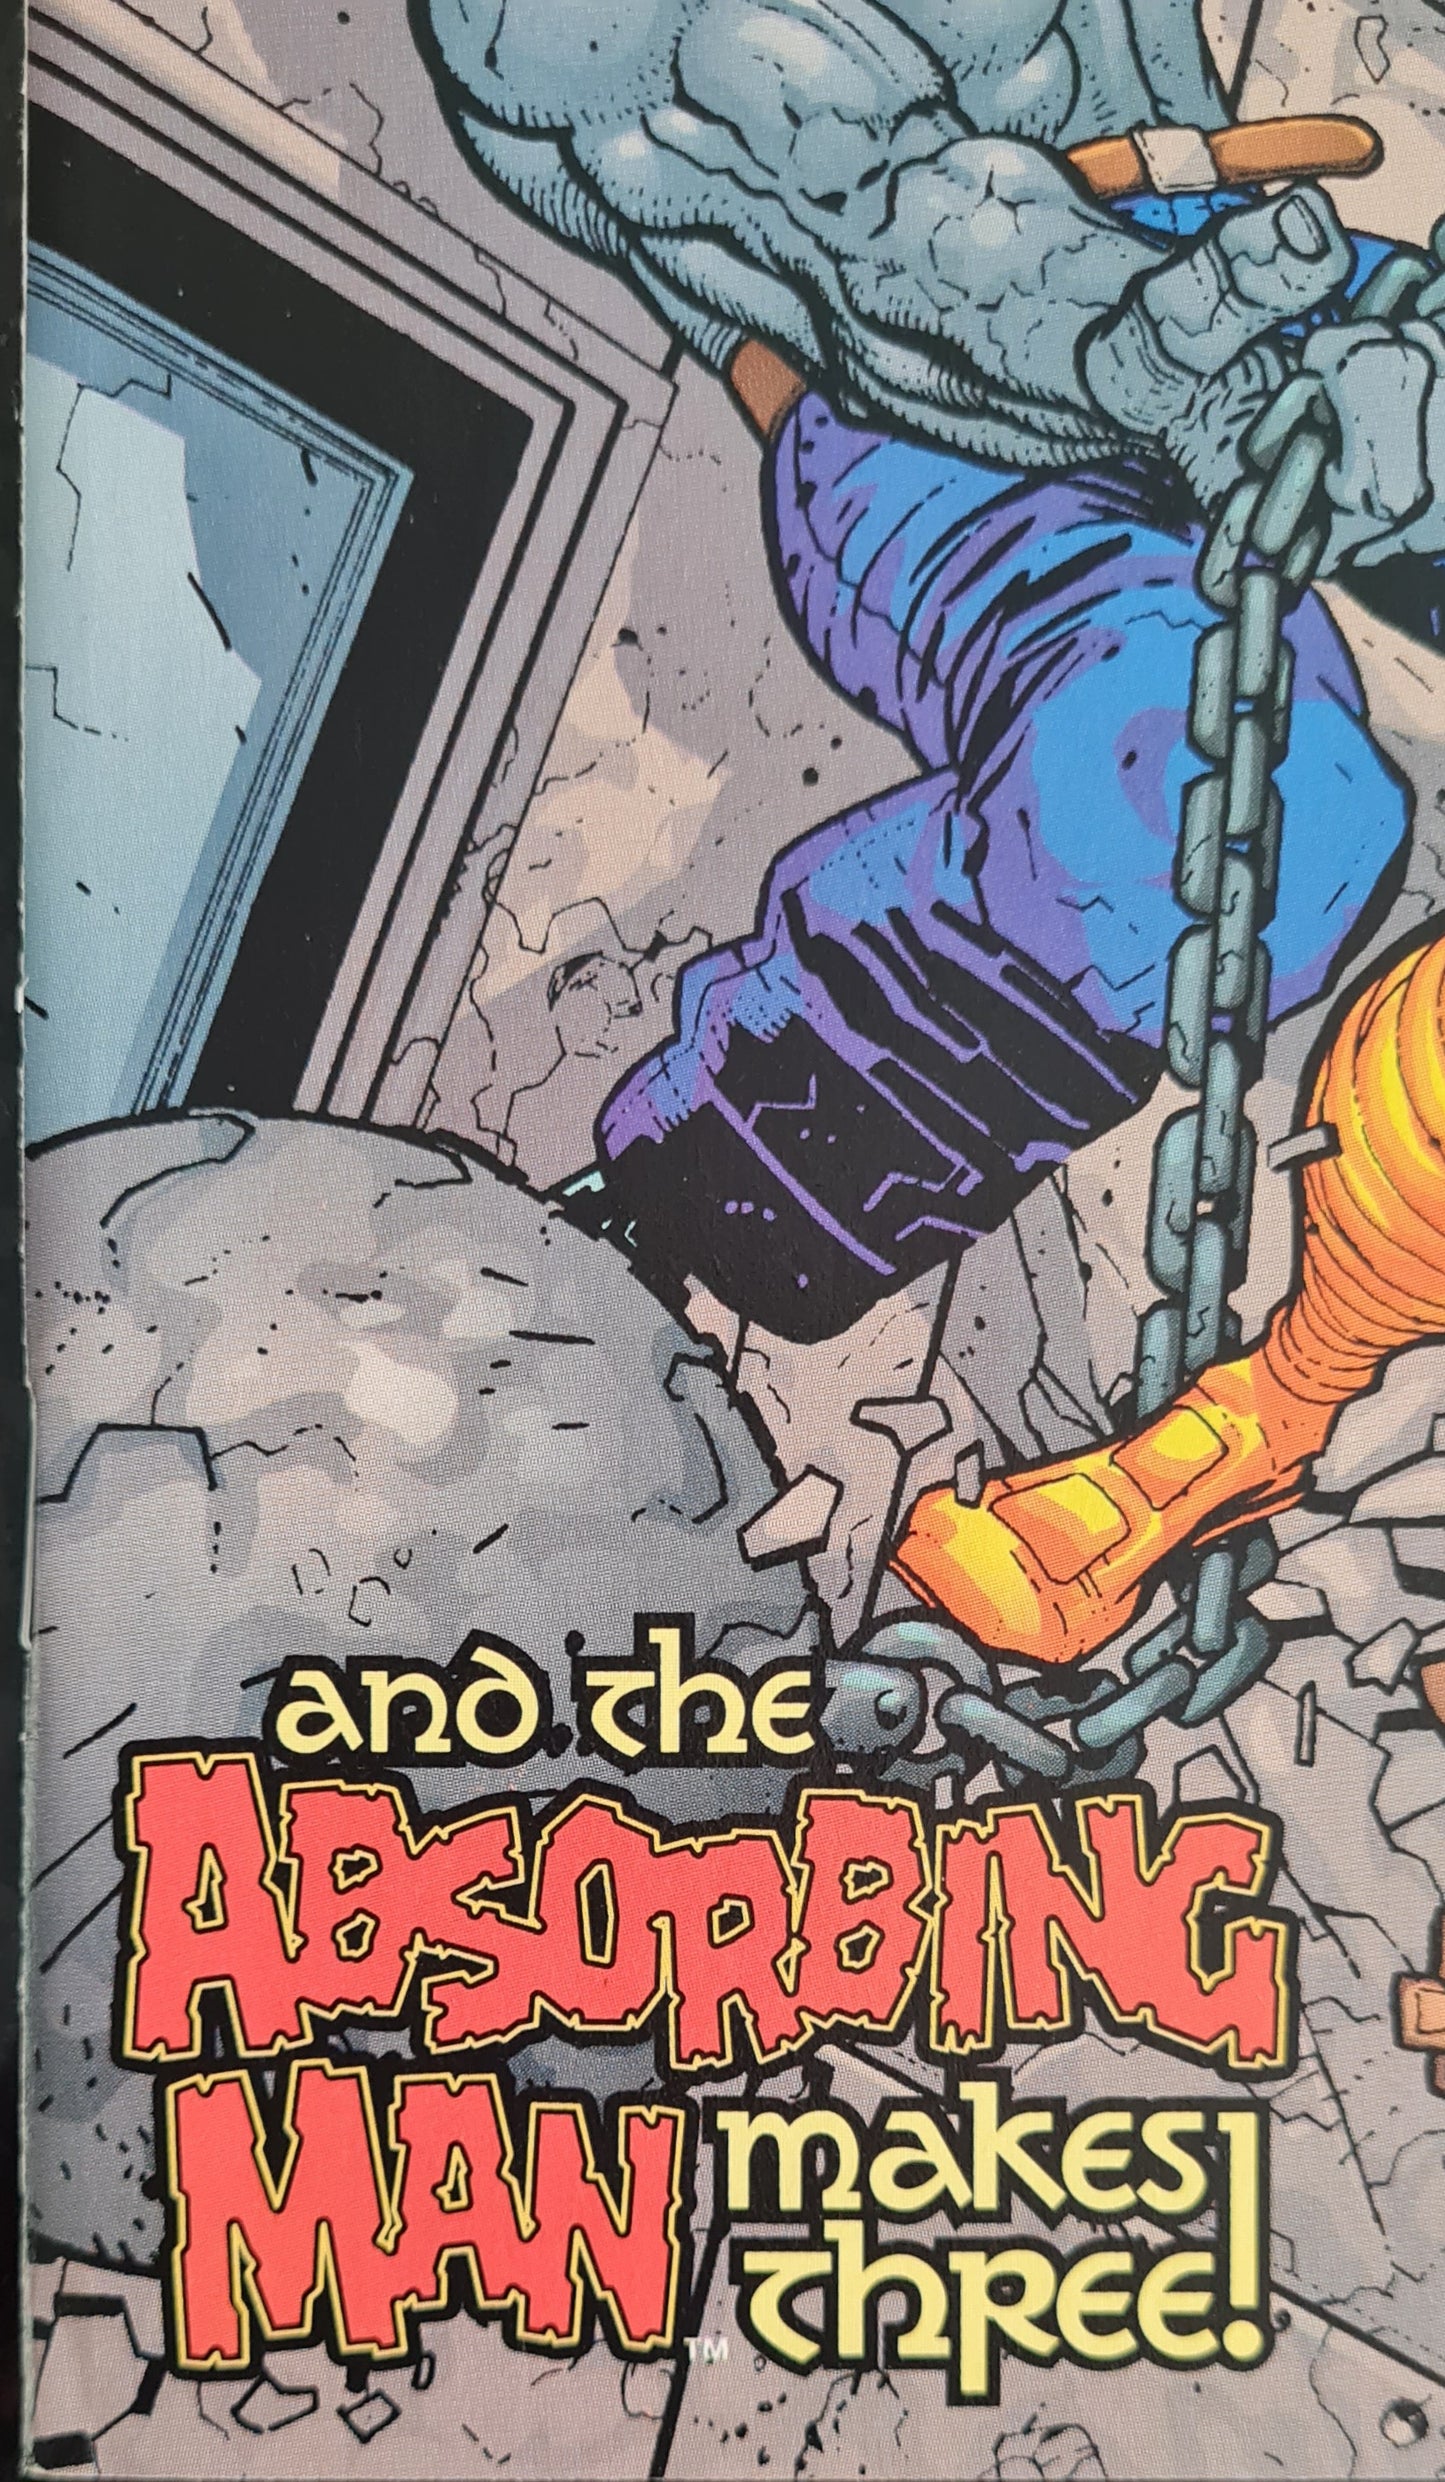 Thor - 1998 Marvel Comics #14